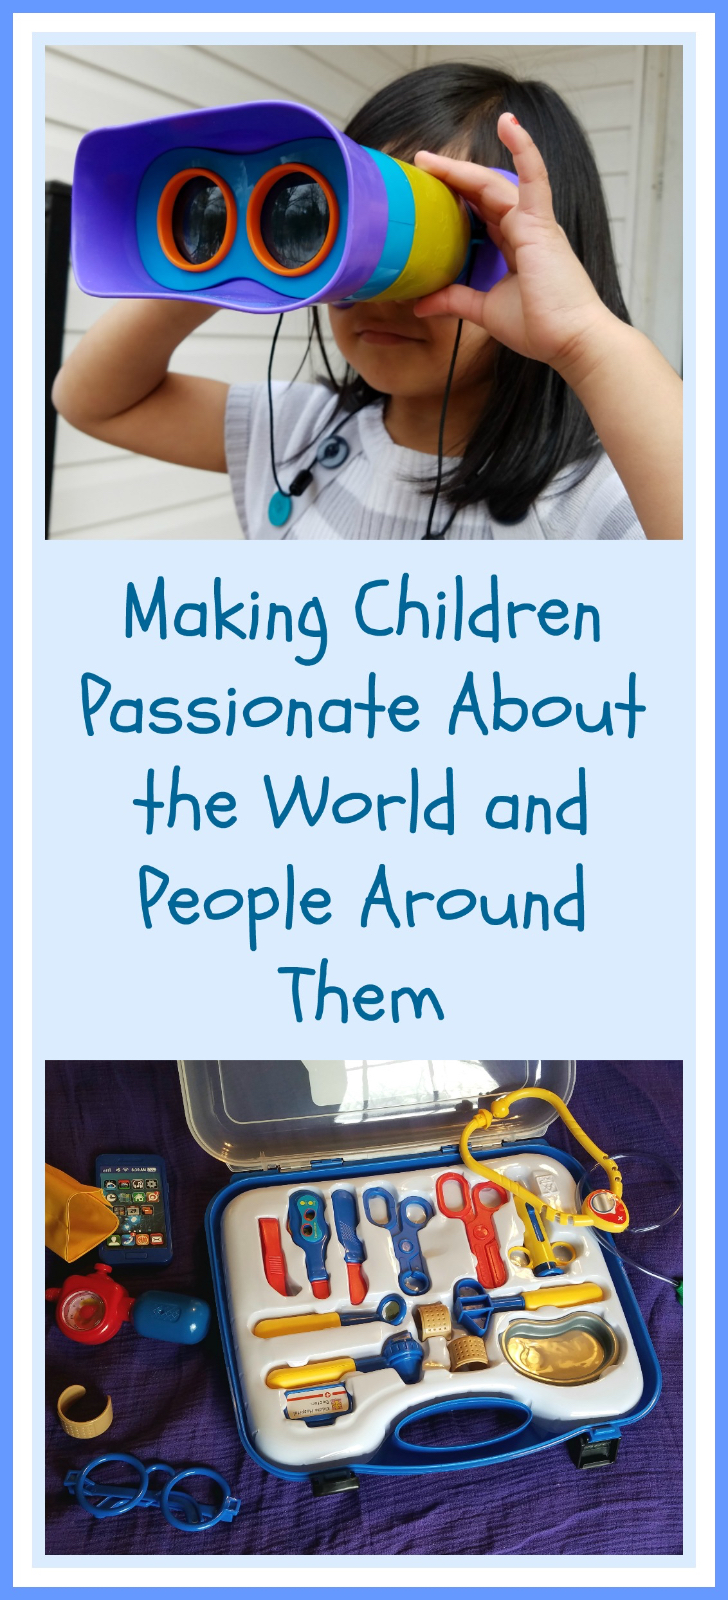 Making children passionate